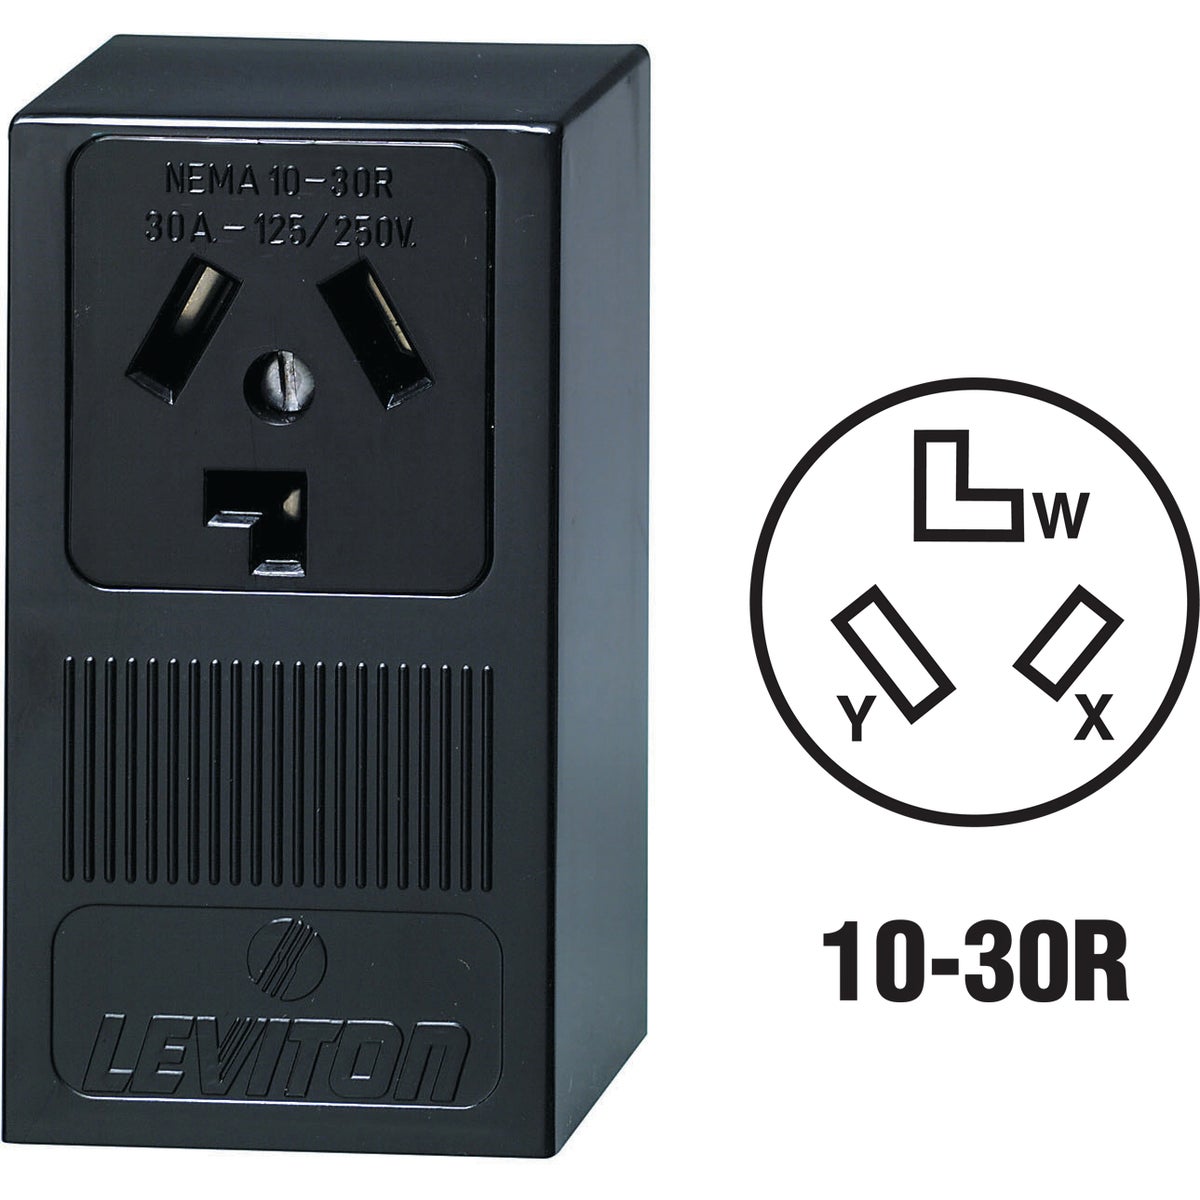 Item 514704, Dryer power outlet that accepts aluminum or copper conductors.